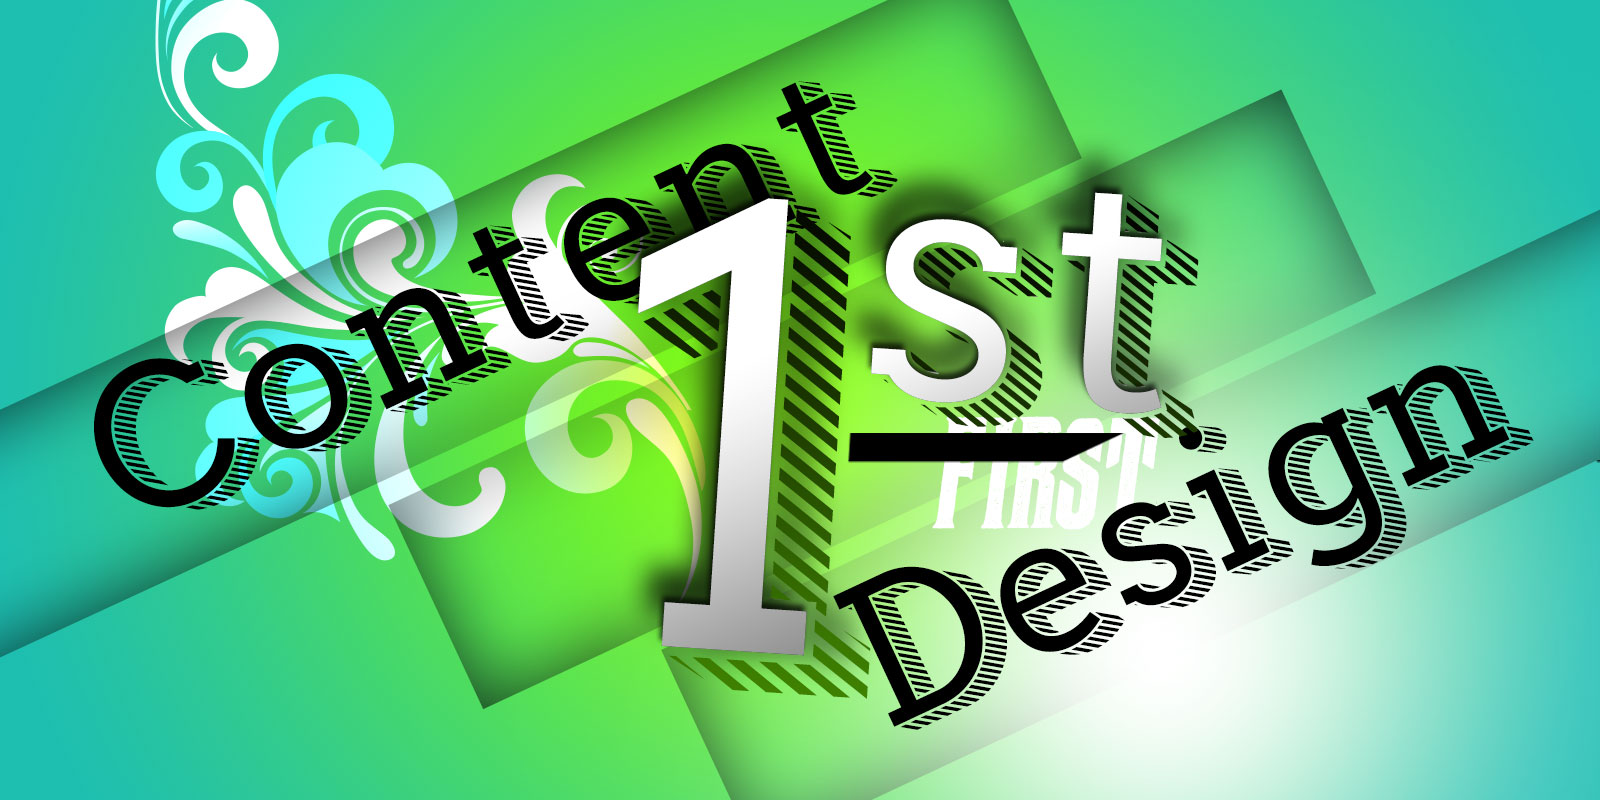 Content First Design